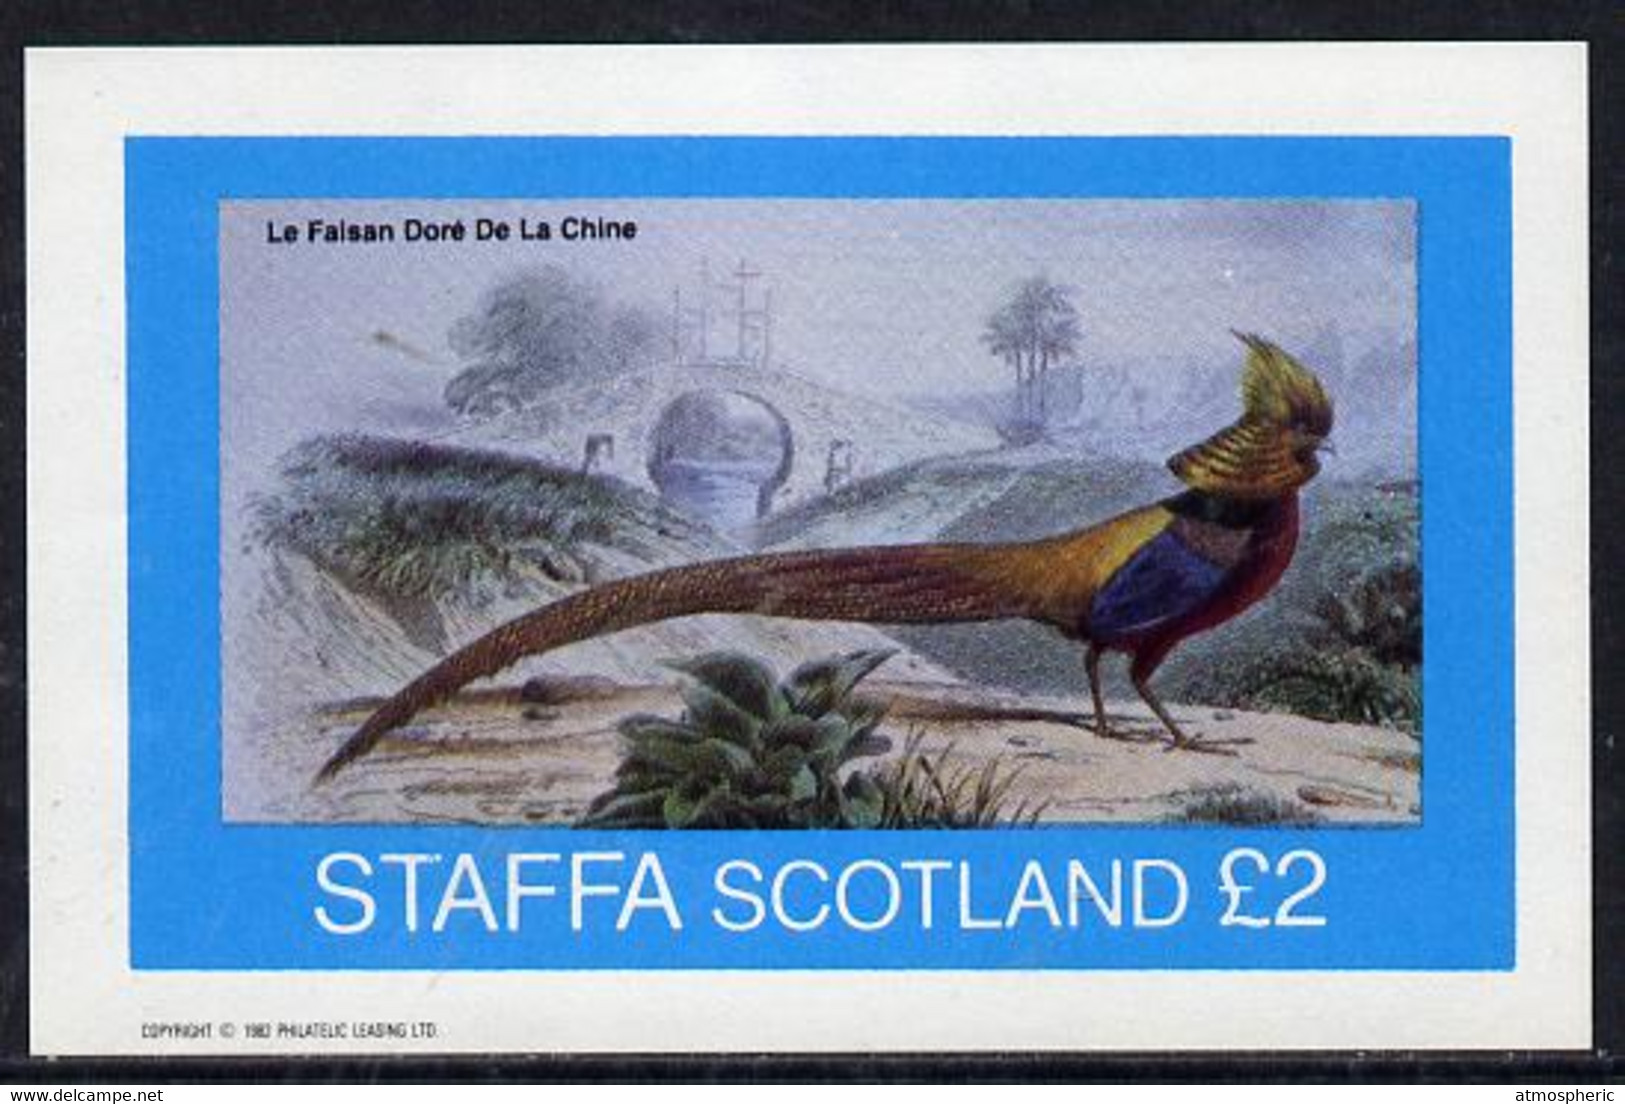 Staffa 1982 Birds #14 (Le Faisan Dore De La Chine) Imperf Deluxe Sheet (£2 Value) U/M - Unclassified